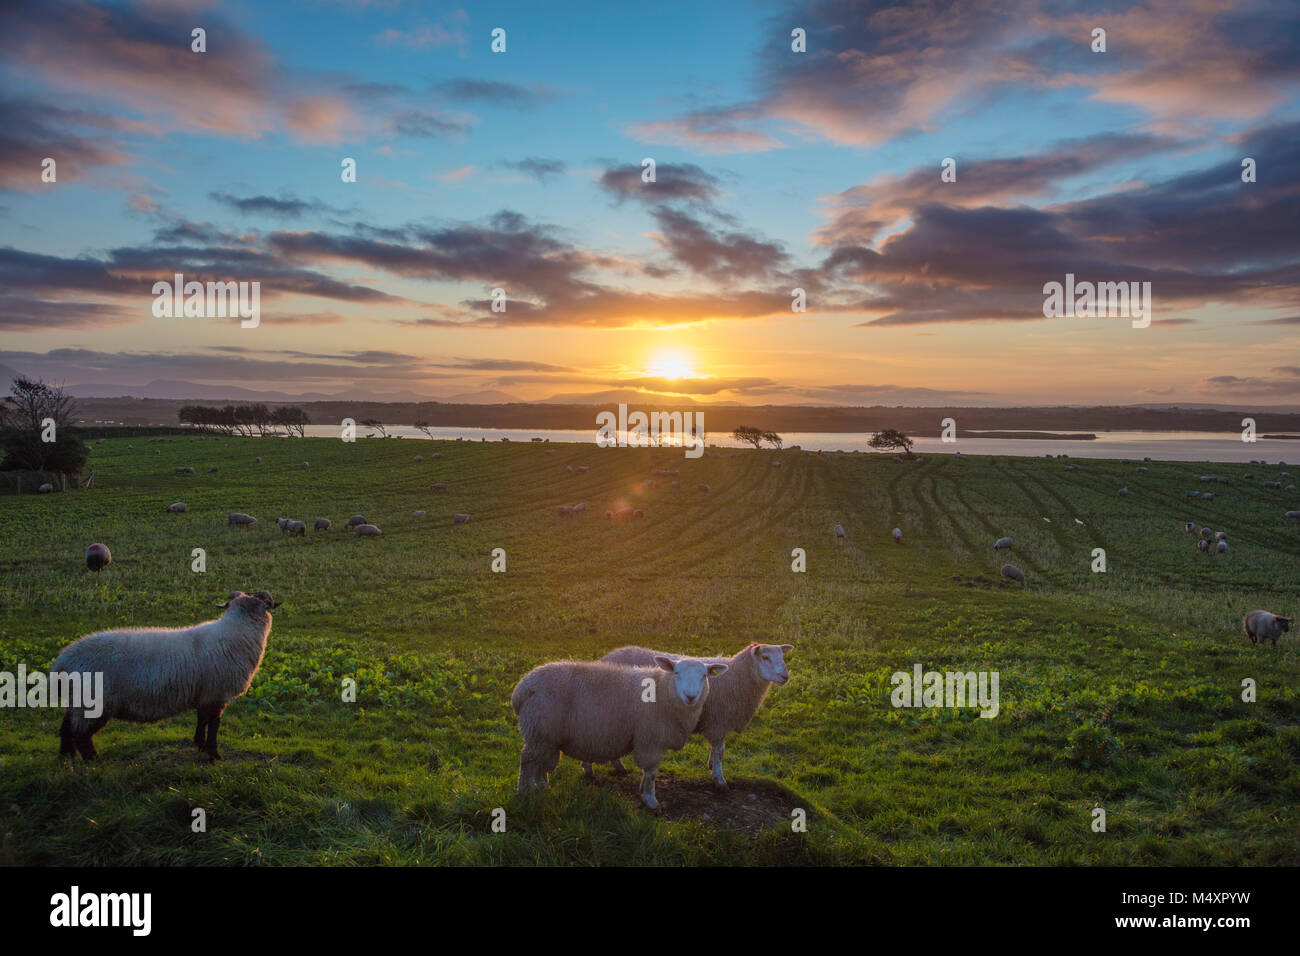 Sheep and sunset over the River Moy, County Sligo, Ireland. Stock Photo